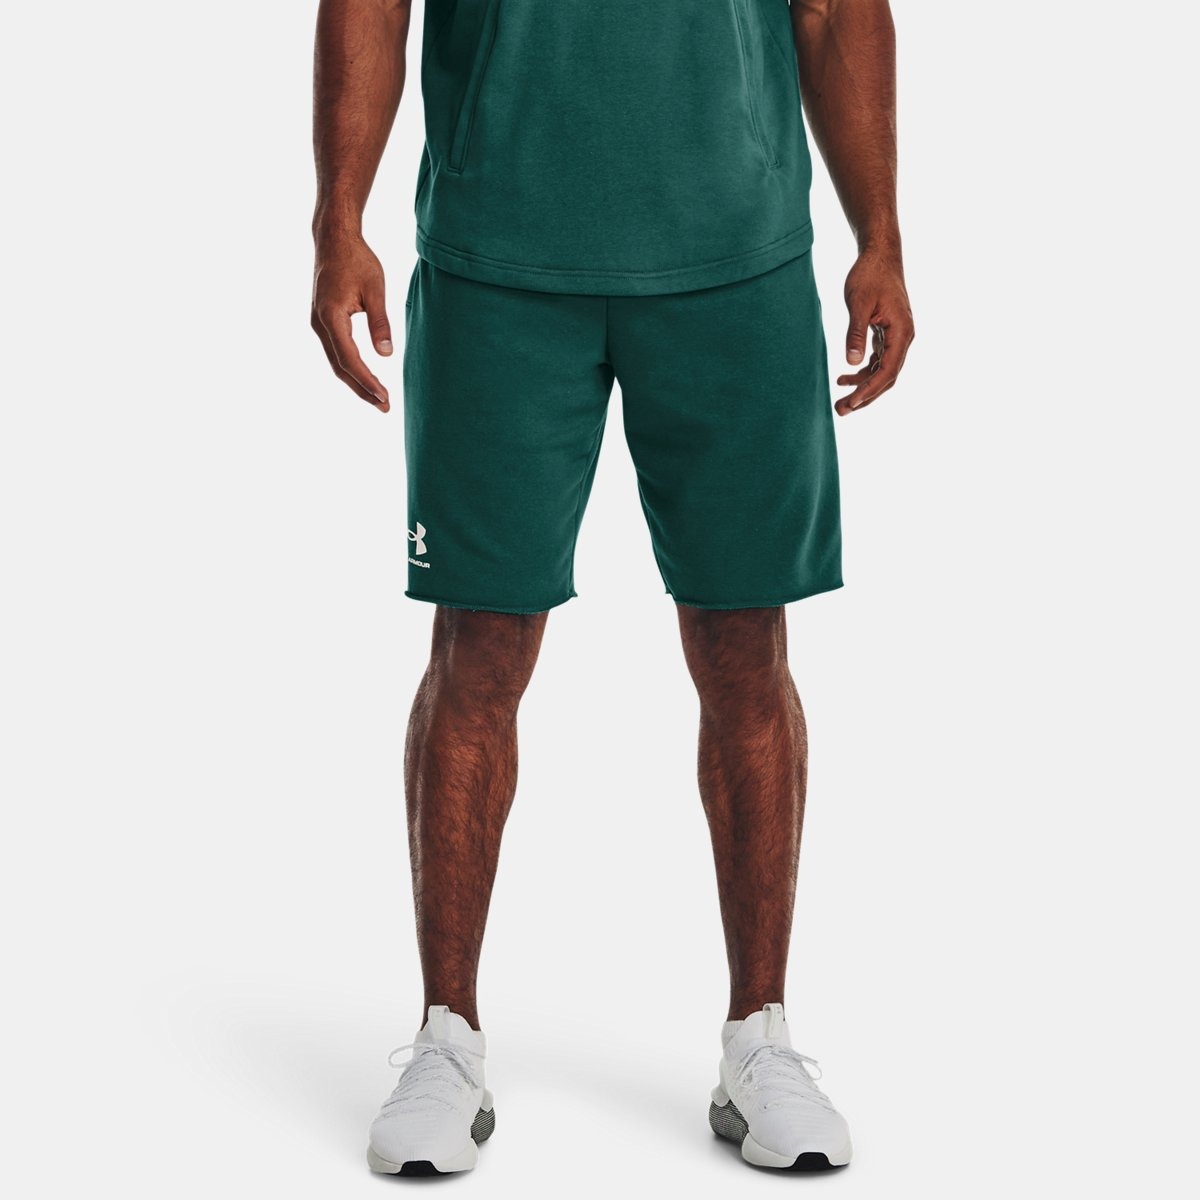 Green - Shorts - Men - Under Armour GOOFASH